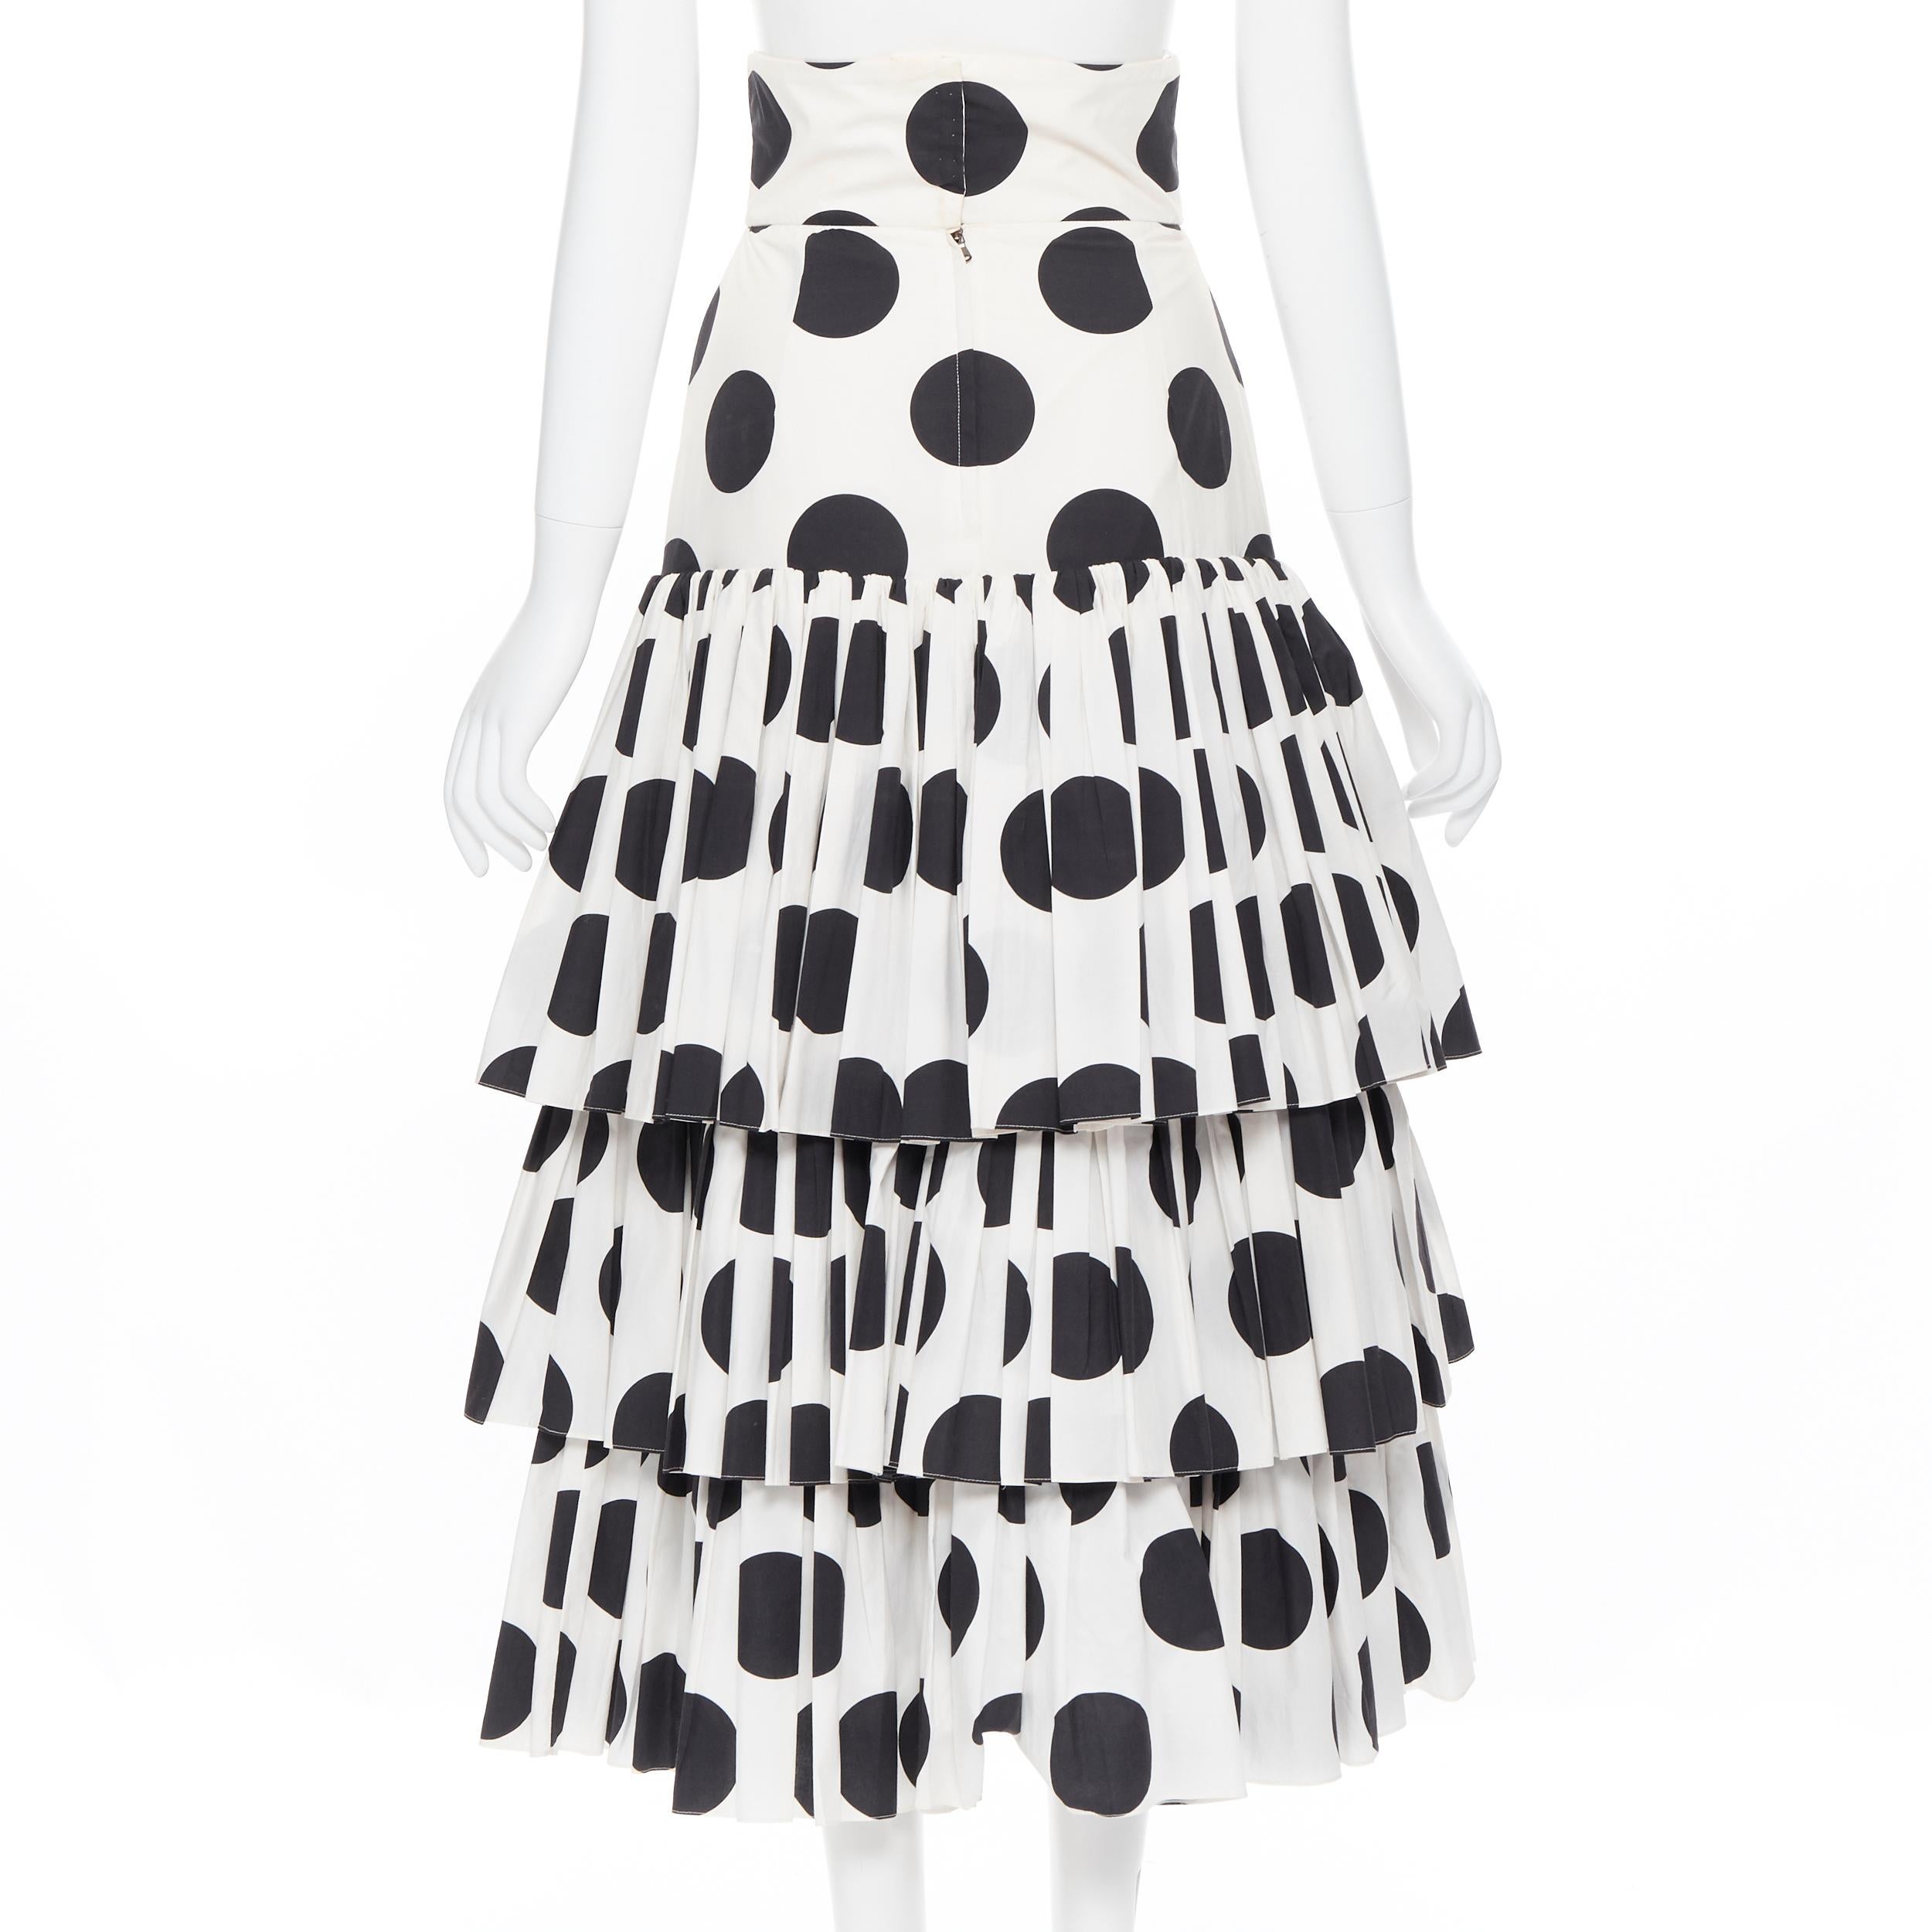 DOLCE GABBANA 100% cotton black white polka dot tiered flared skirt IT38 26